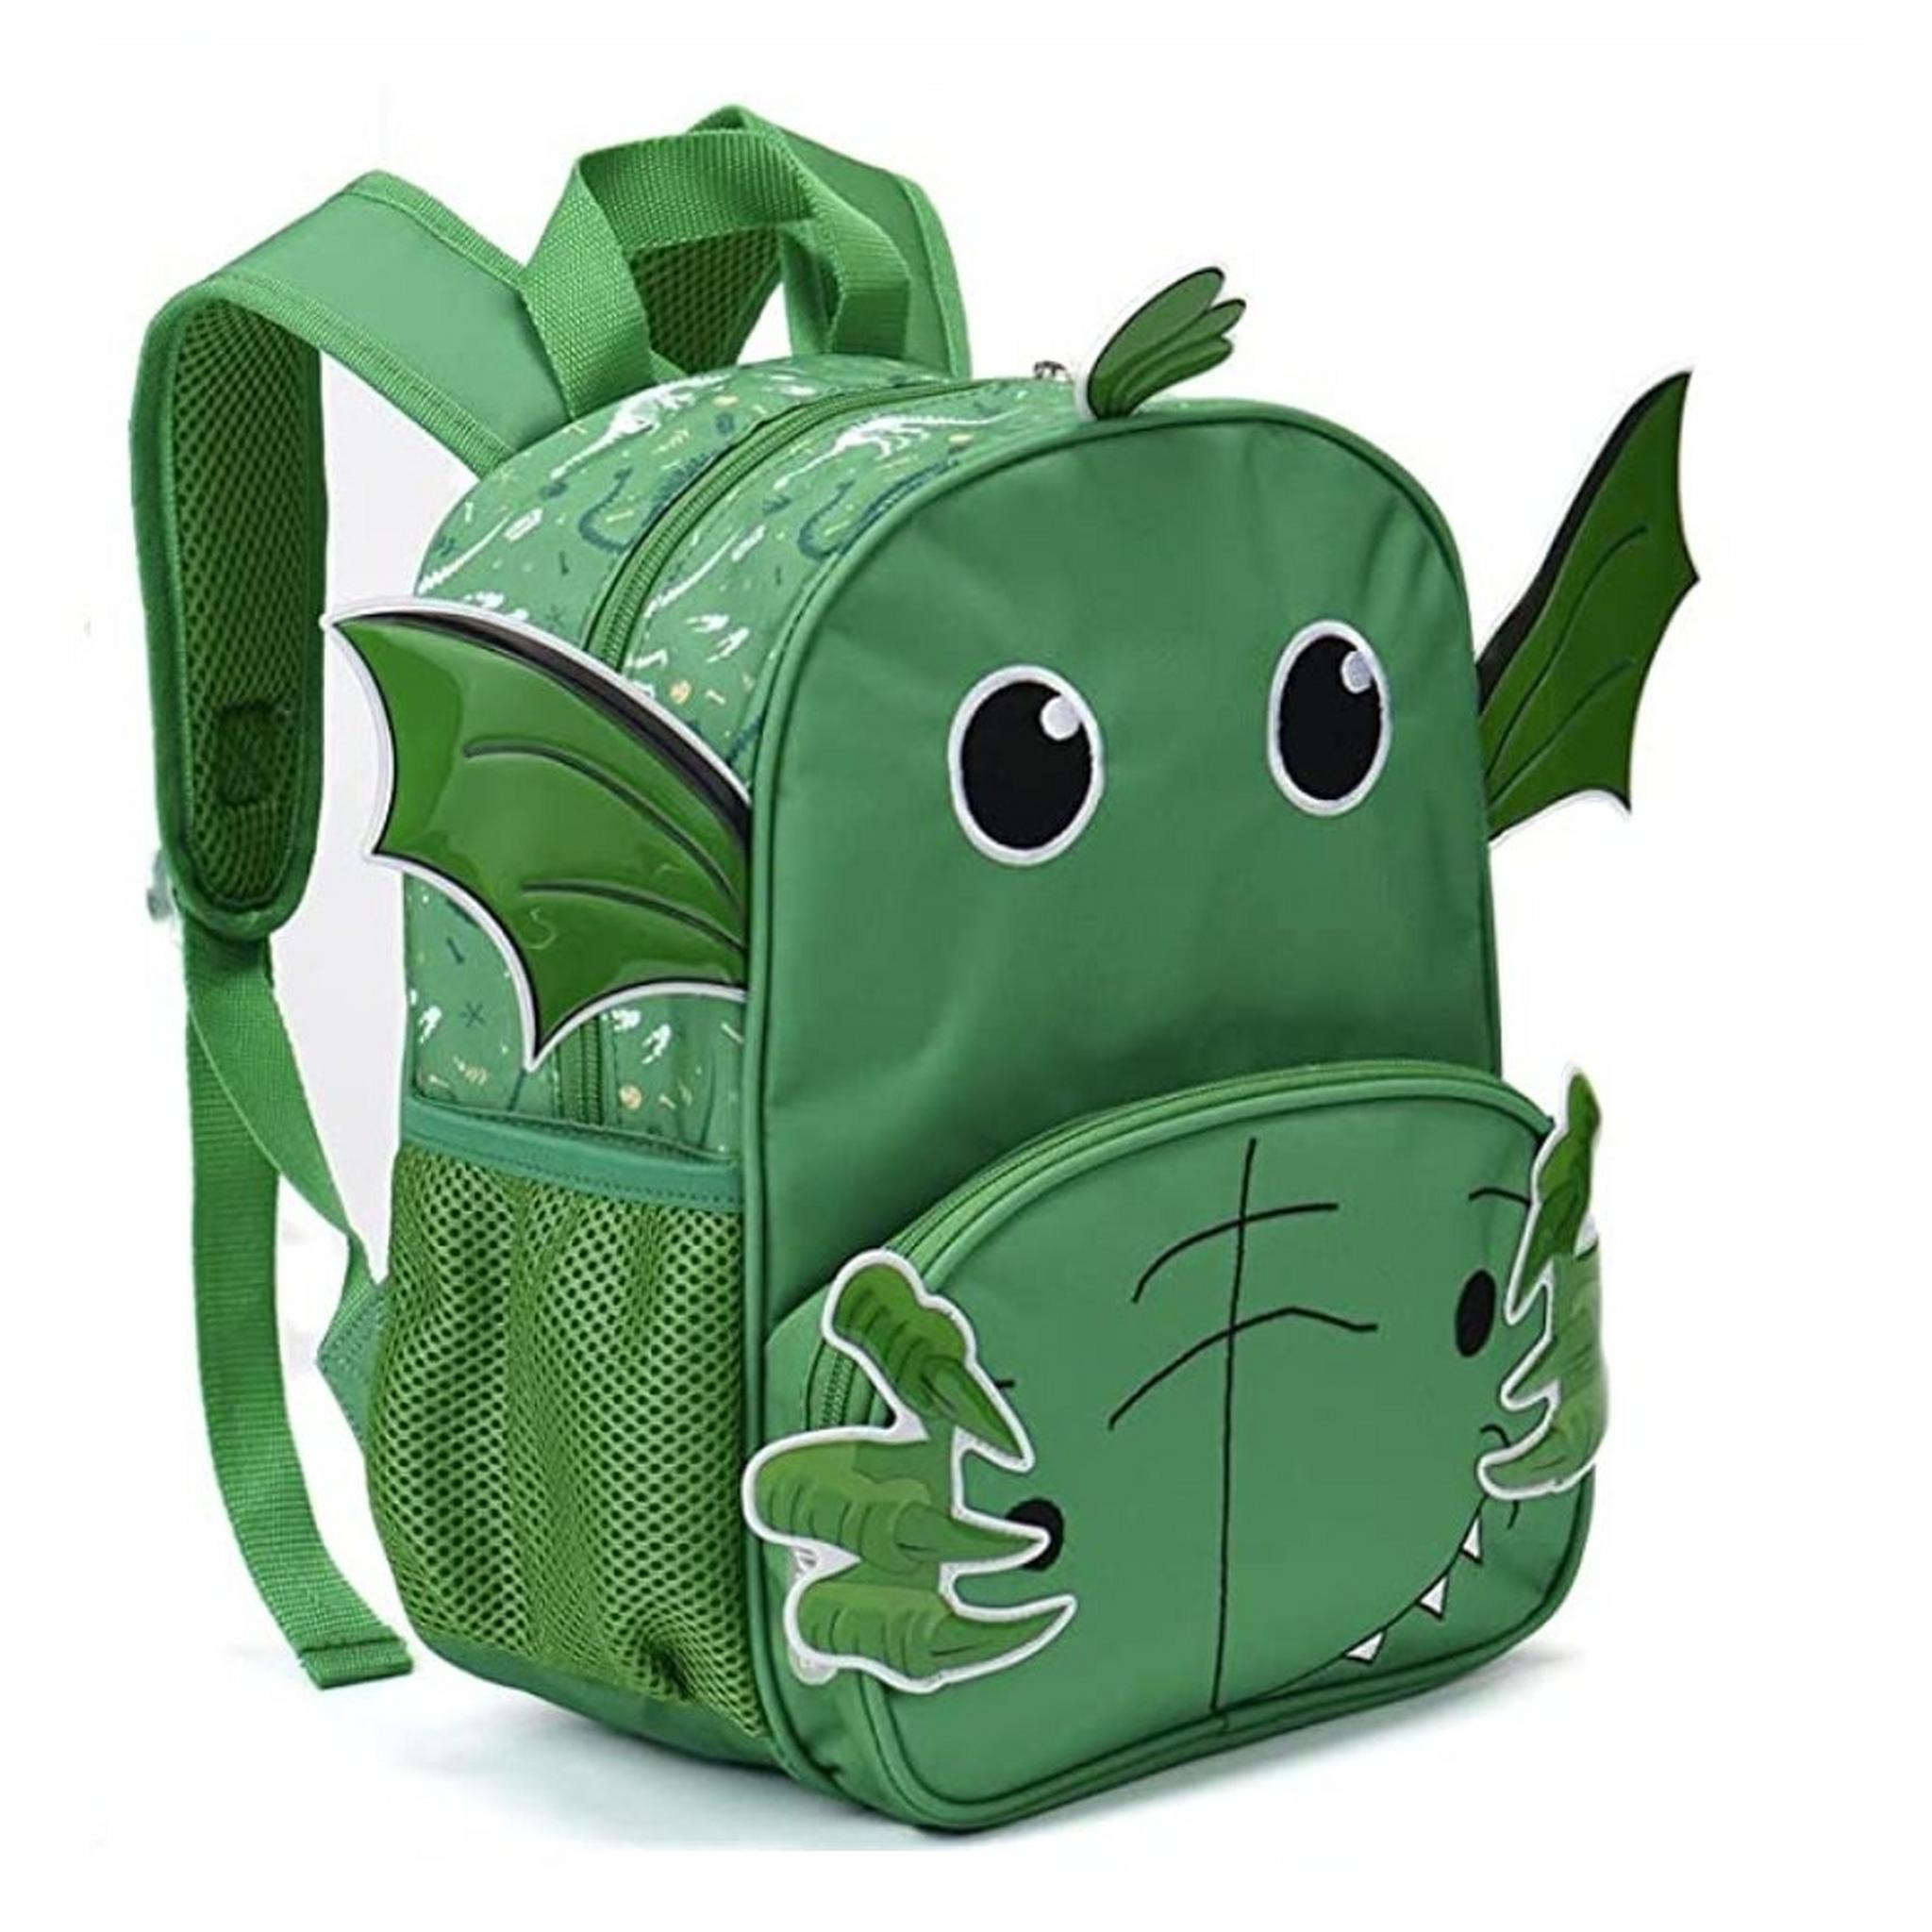 Riwbox Dragon Backpack - Green